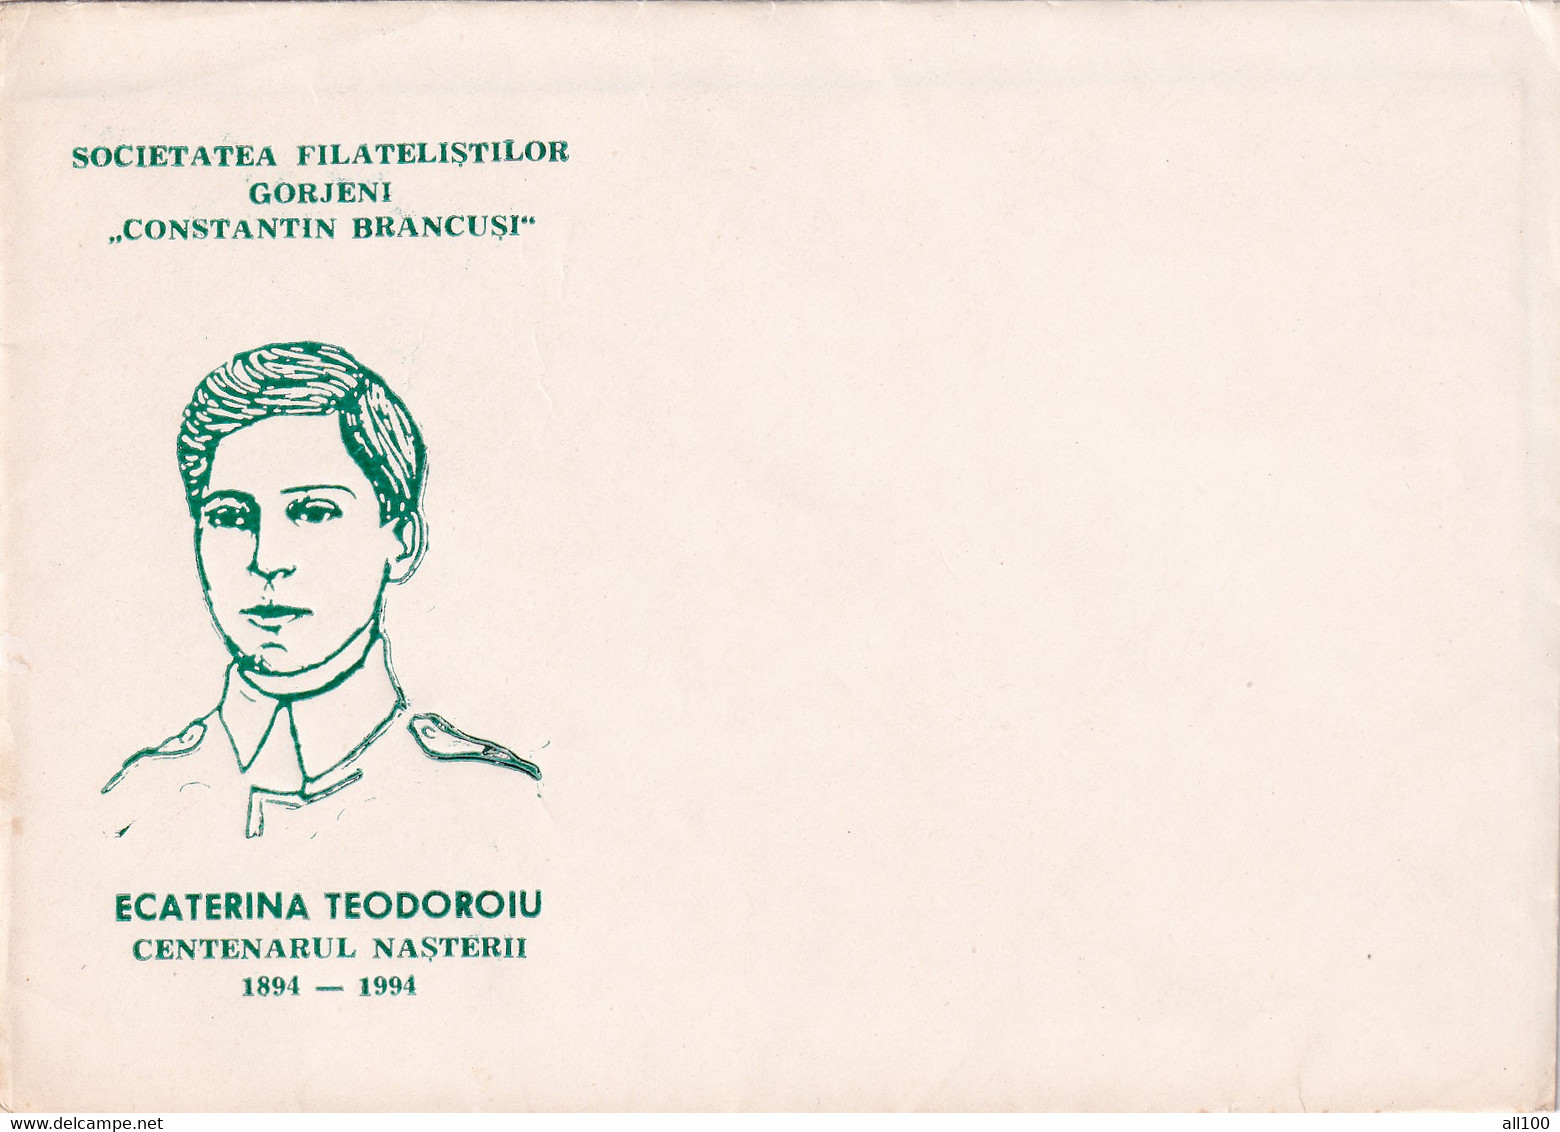 A19352 - ECATERINA TEODORIU CENTENARUL NASTERII COVER ENVELOPE UNUSED 1994 ROMANIA SOCIETATEA FILATELISTILOR GORJENI - Lettres & Documents